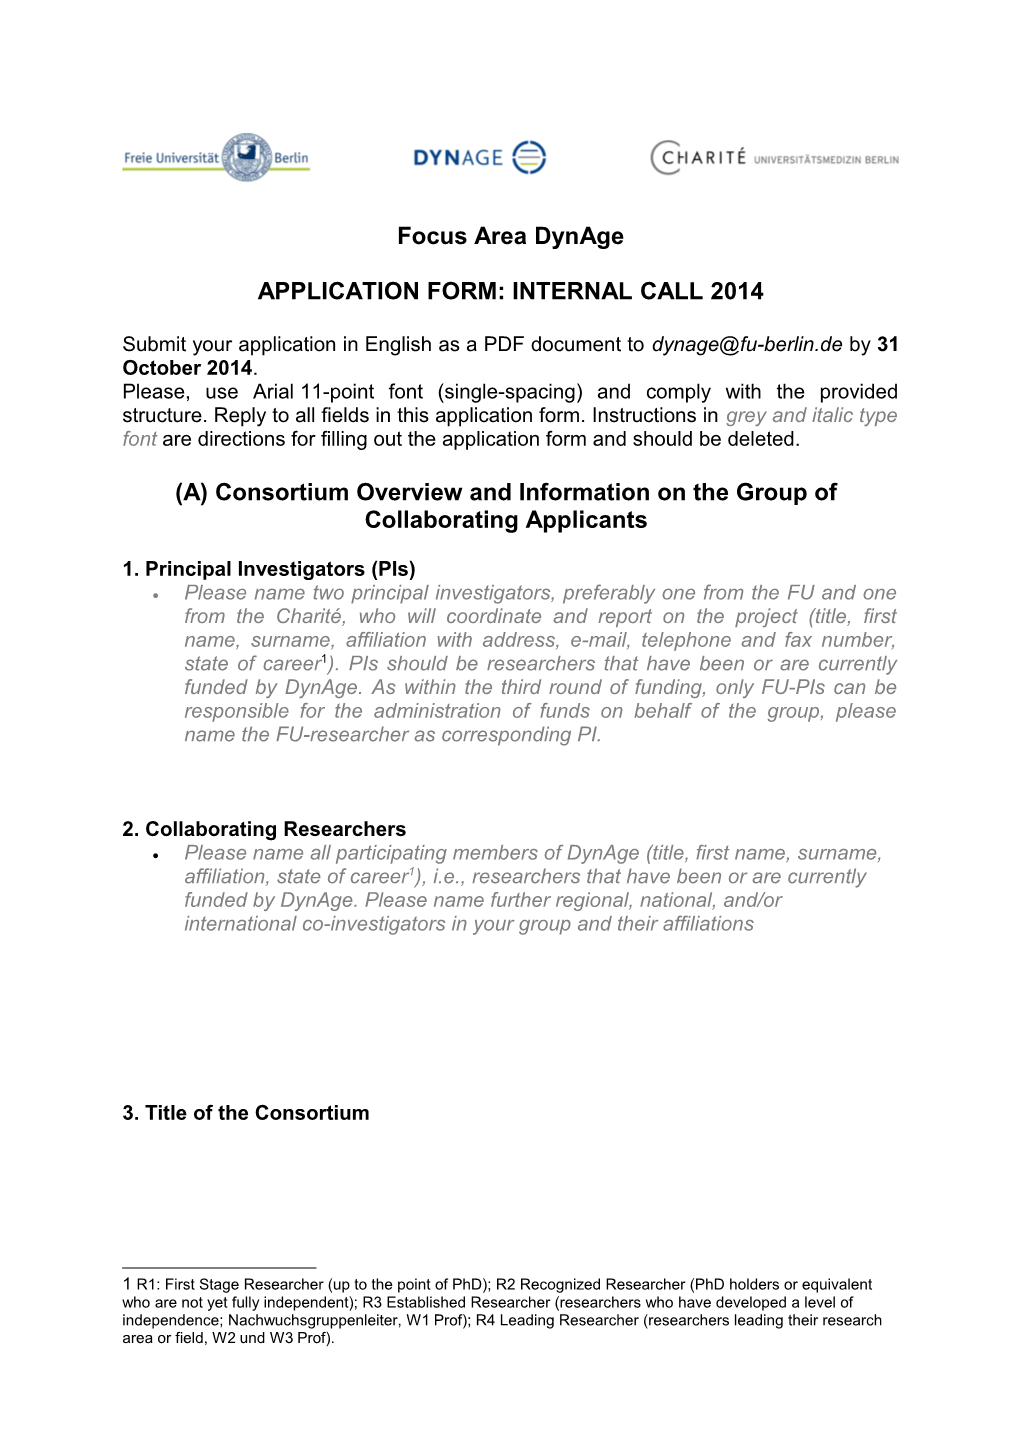 Application Form: Internal Call 2014